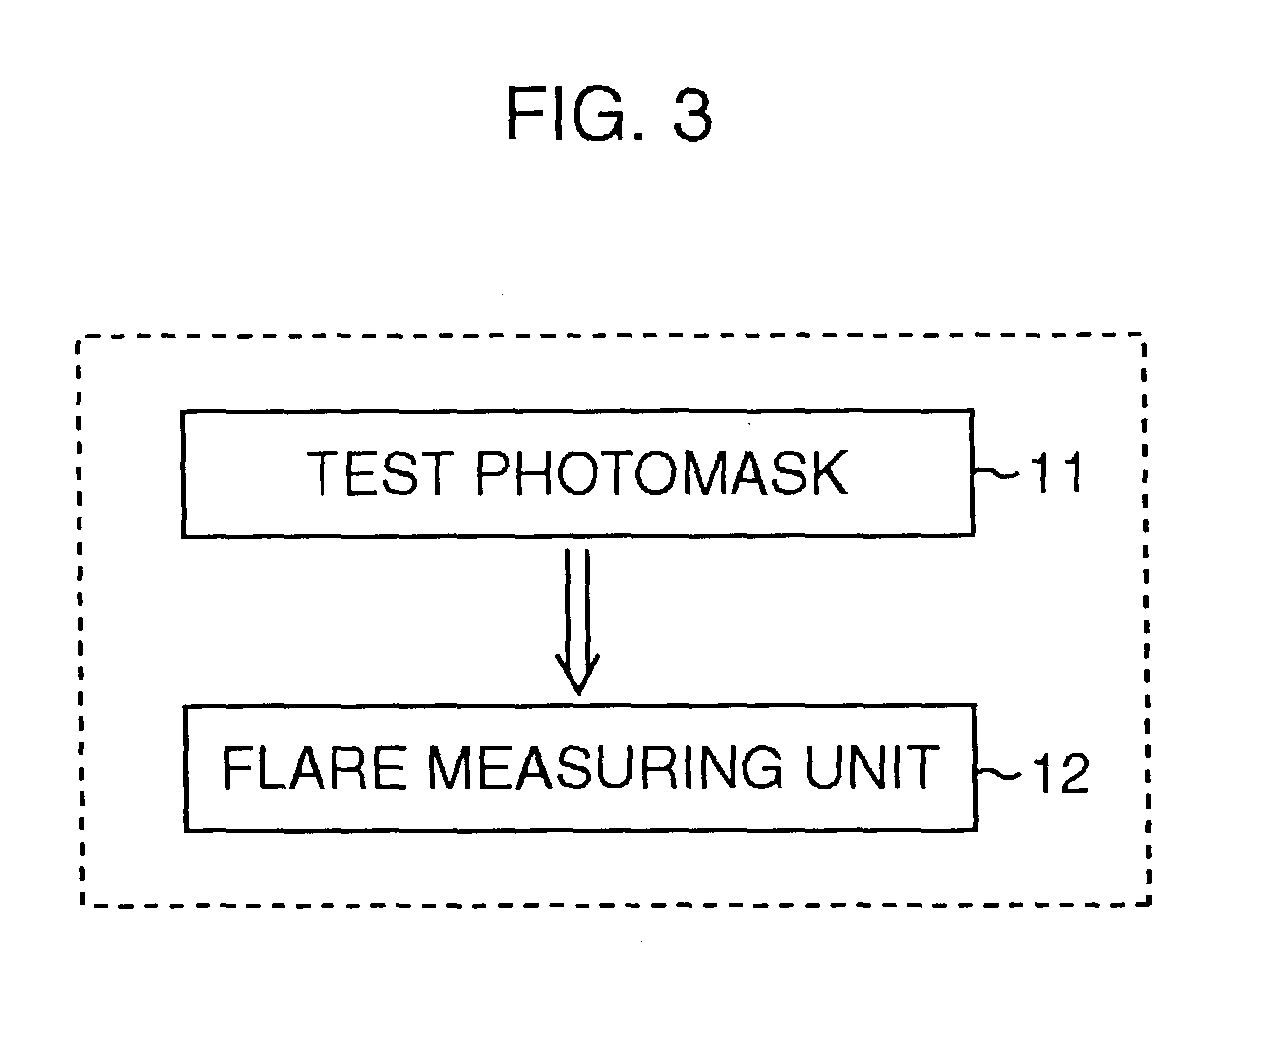 Test photomask, flare evaluation method, and flare compensation method